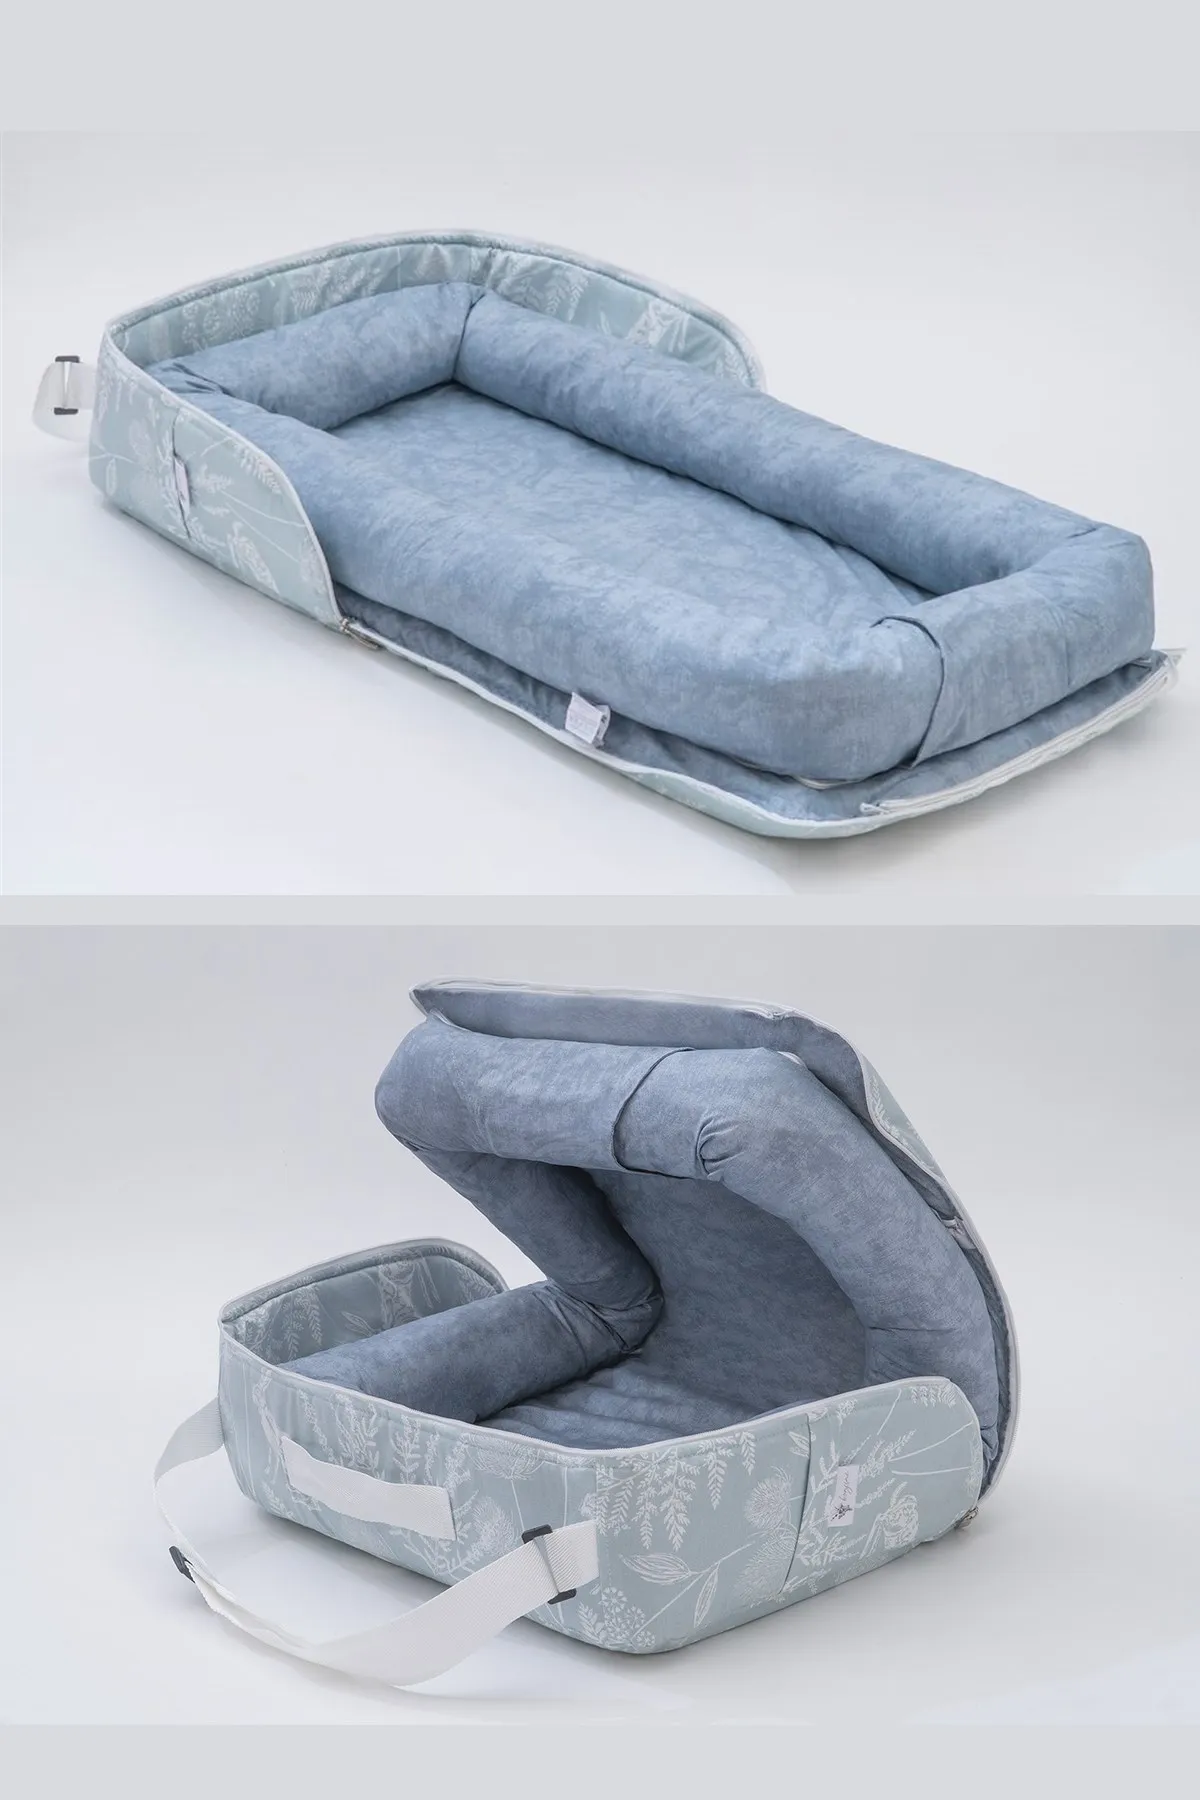 Jaju Baby 3n1 Reflux mattress, Babynest, Mother Bag Blue Patterned Lux ​​Baby Nest